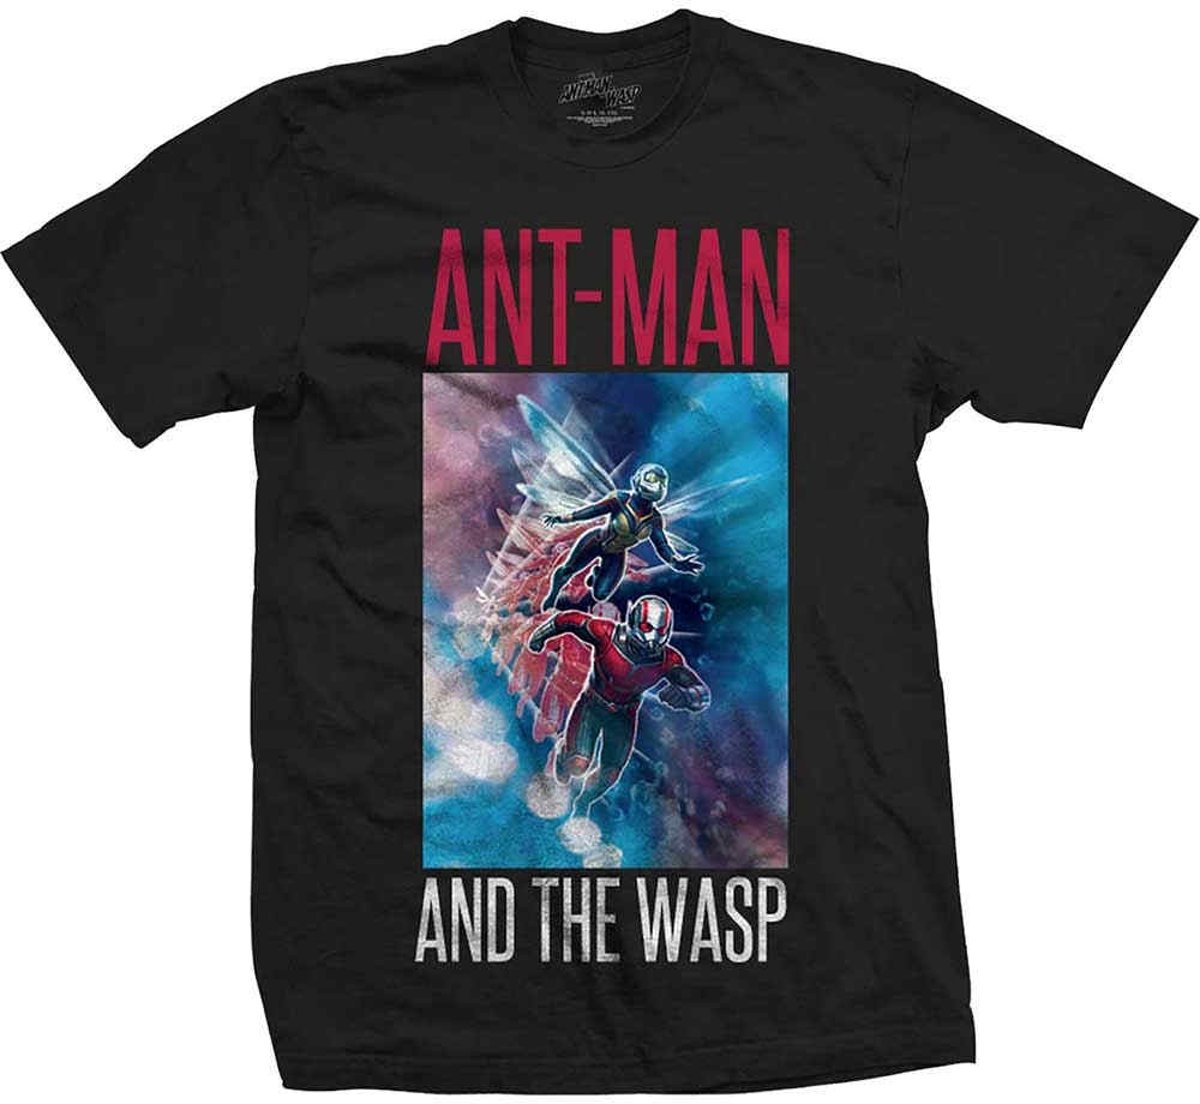 Ant-Man And The Wasp - Action Block heren unisex T-shirt zwart - M